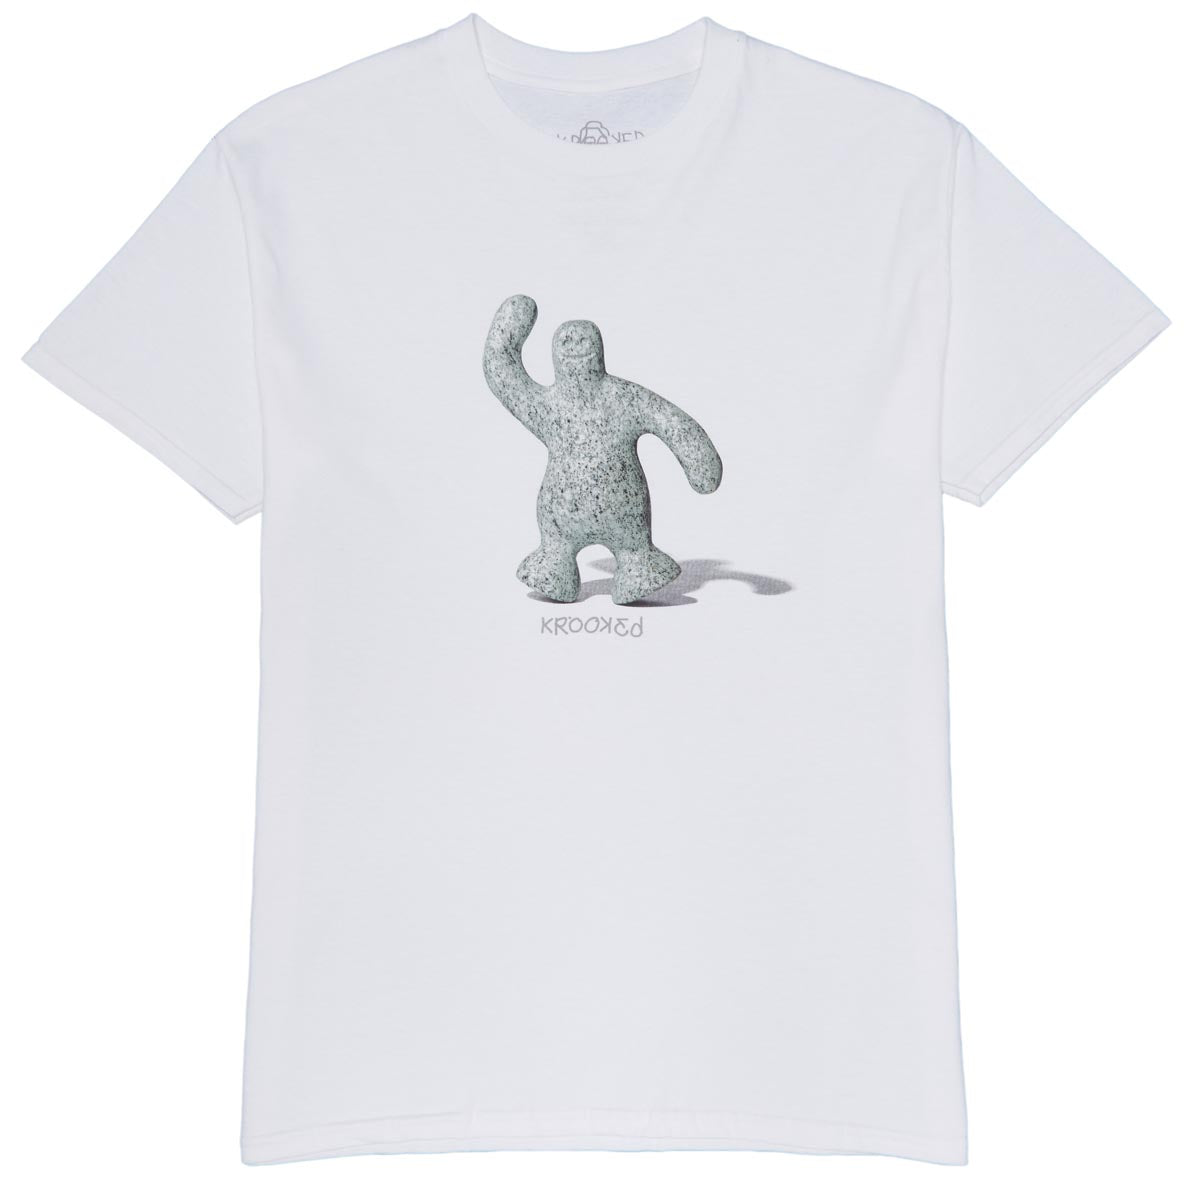 Krooked Lurkerlou Guest T-Shirt - White image 1